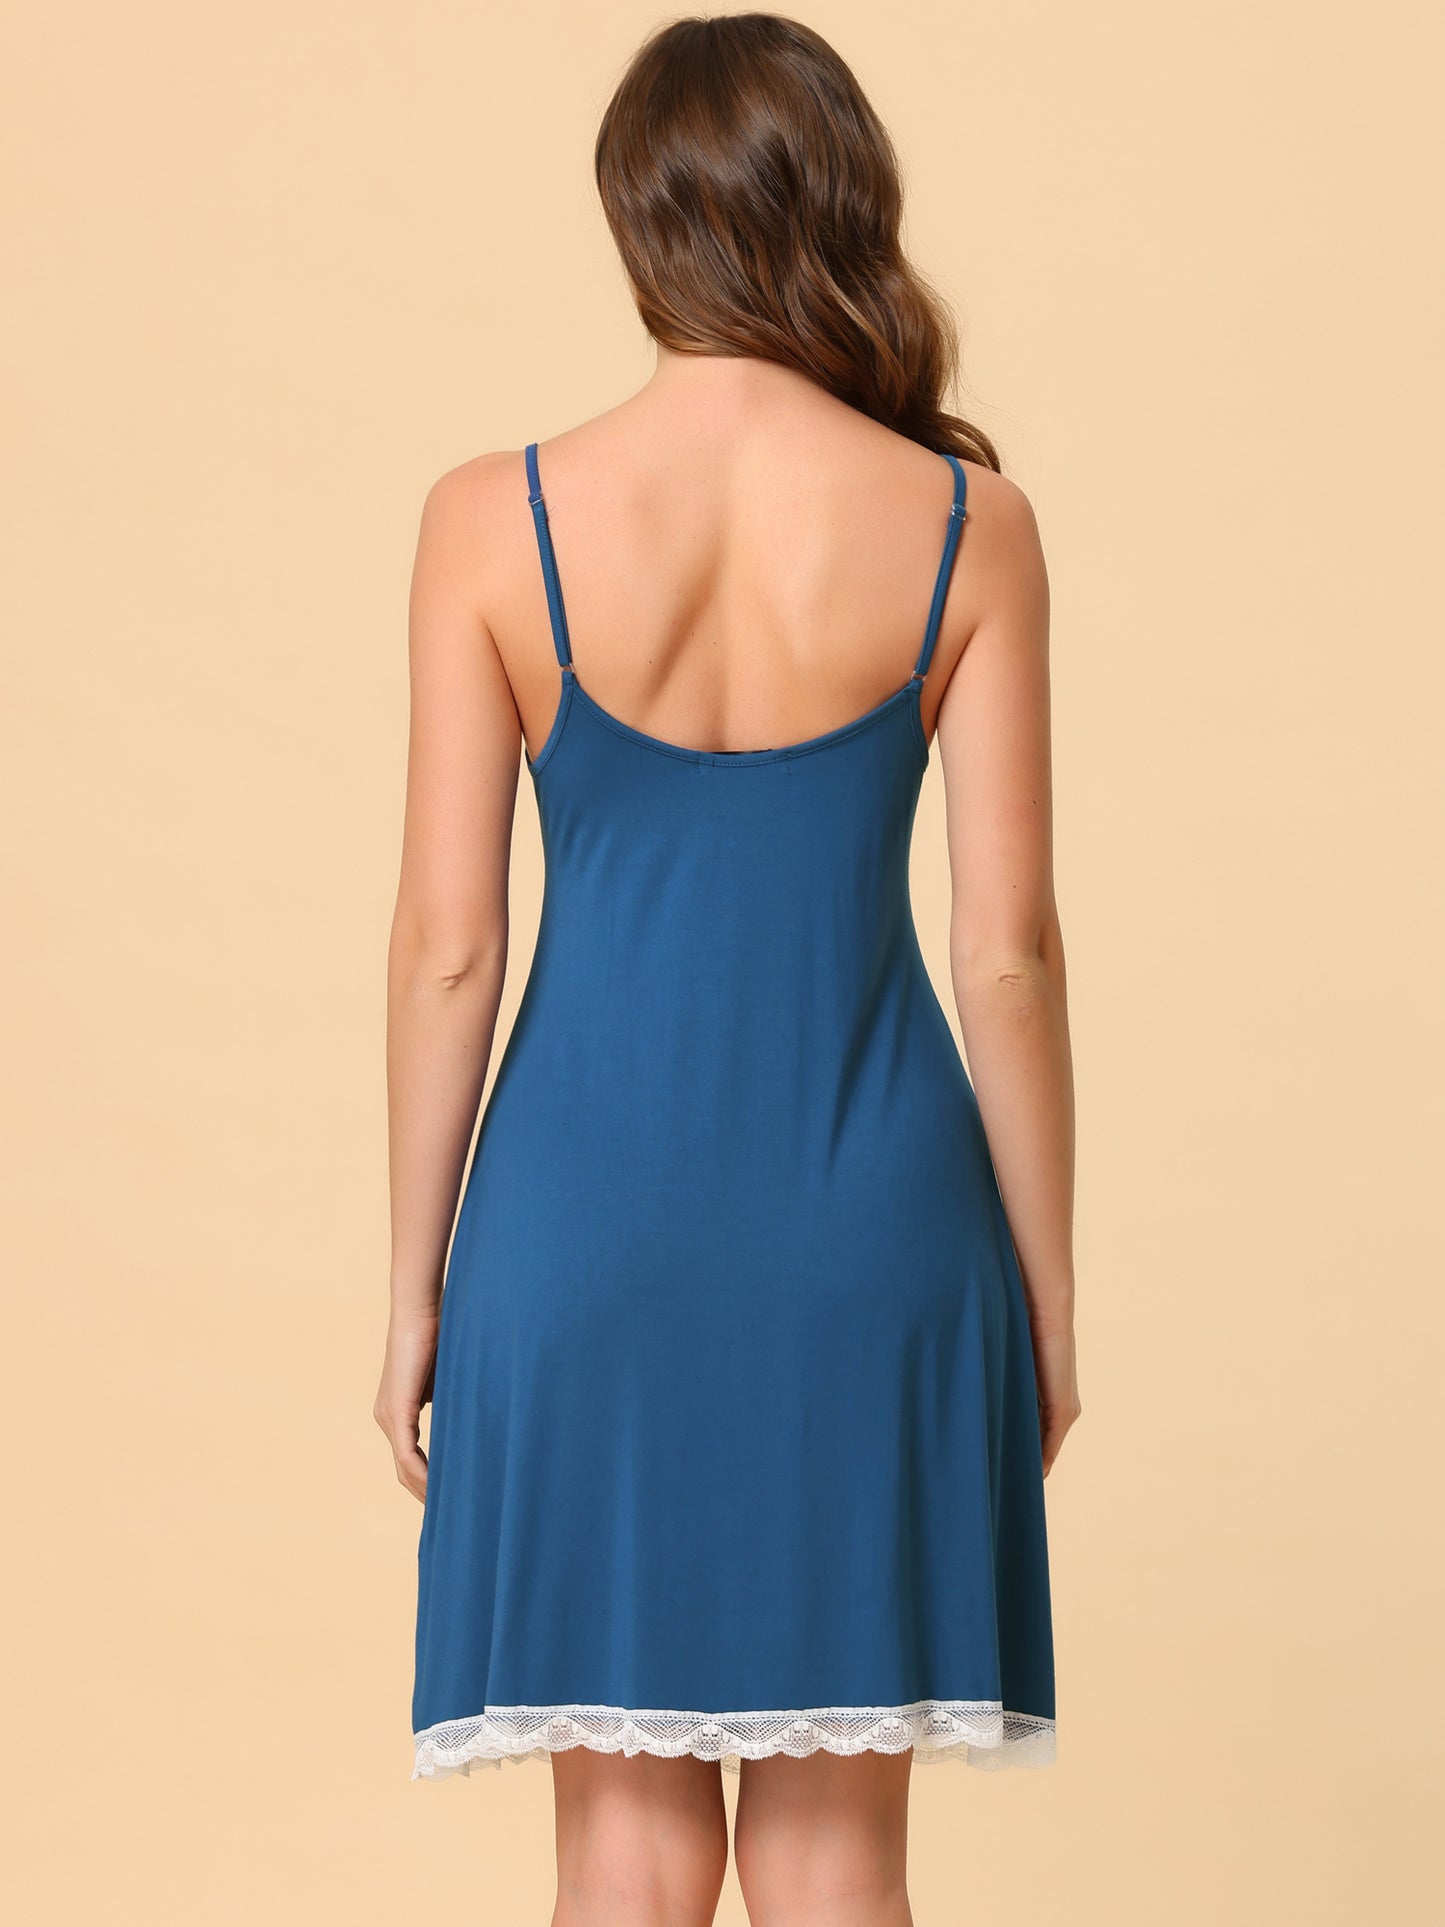 cheibear Pajama V Neck Lace Nightdress Stretchy Lounge Dress Blue